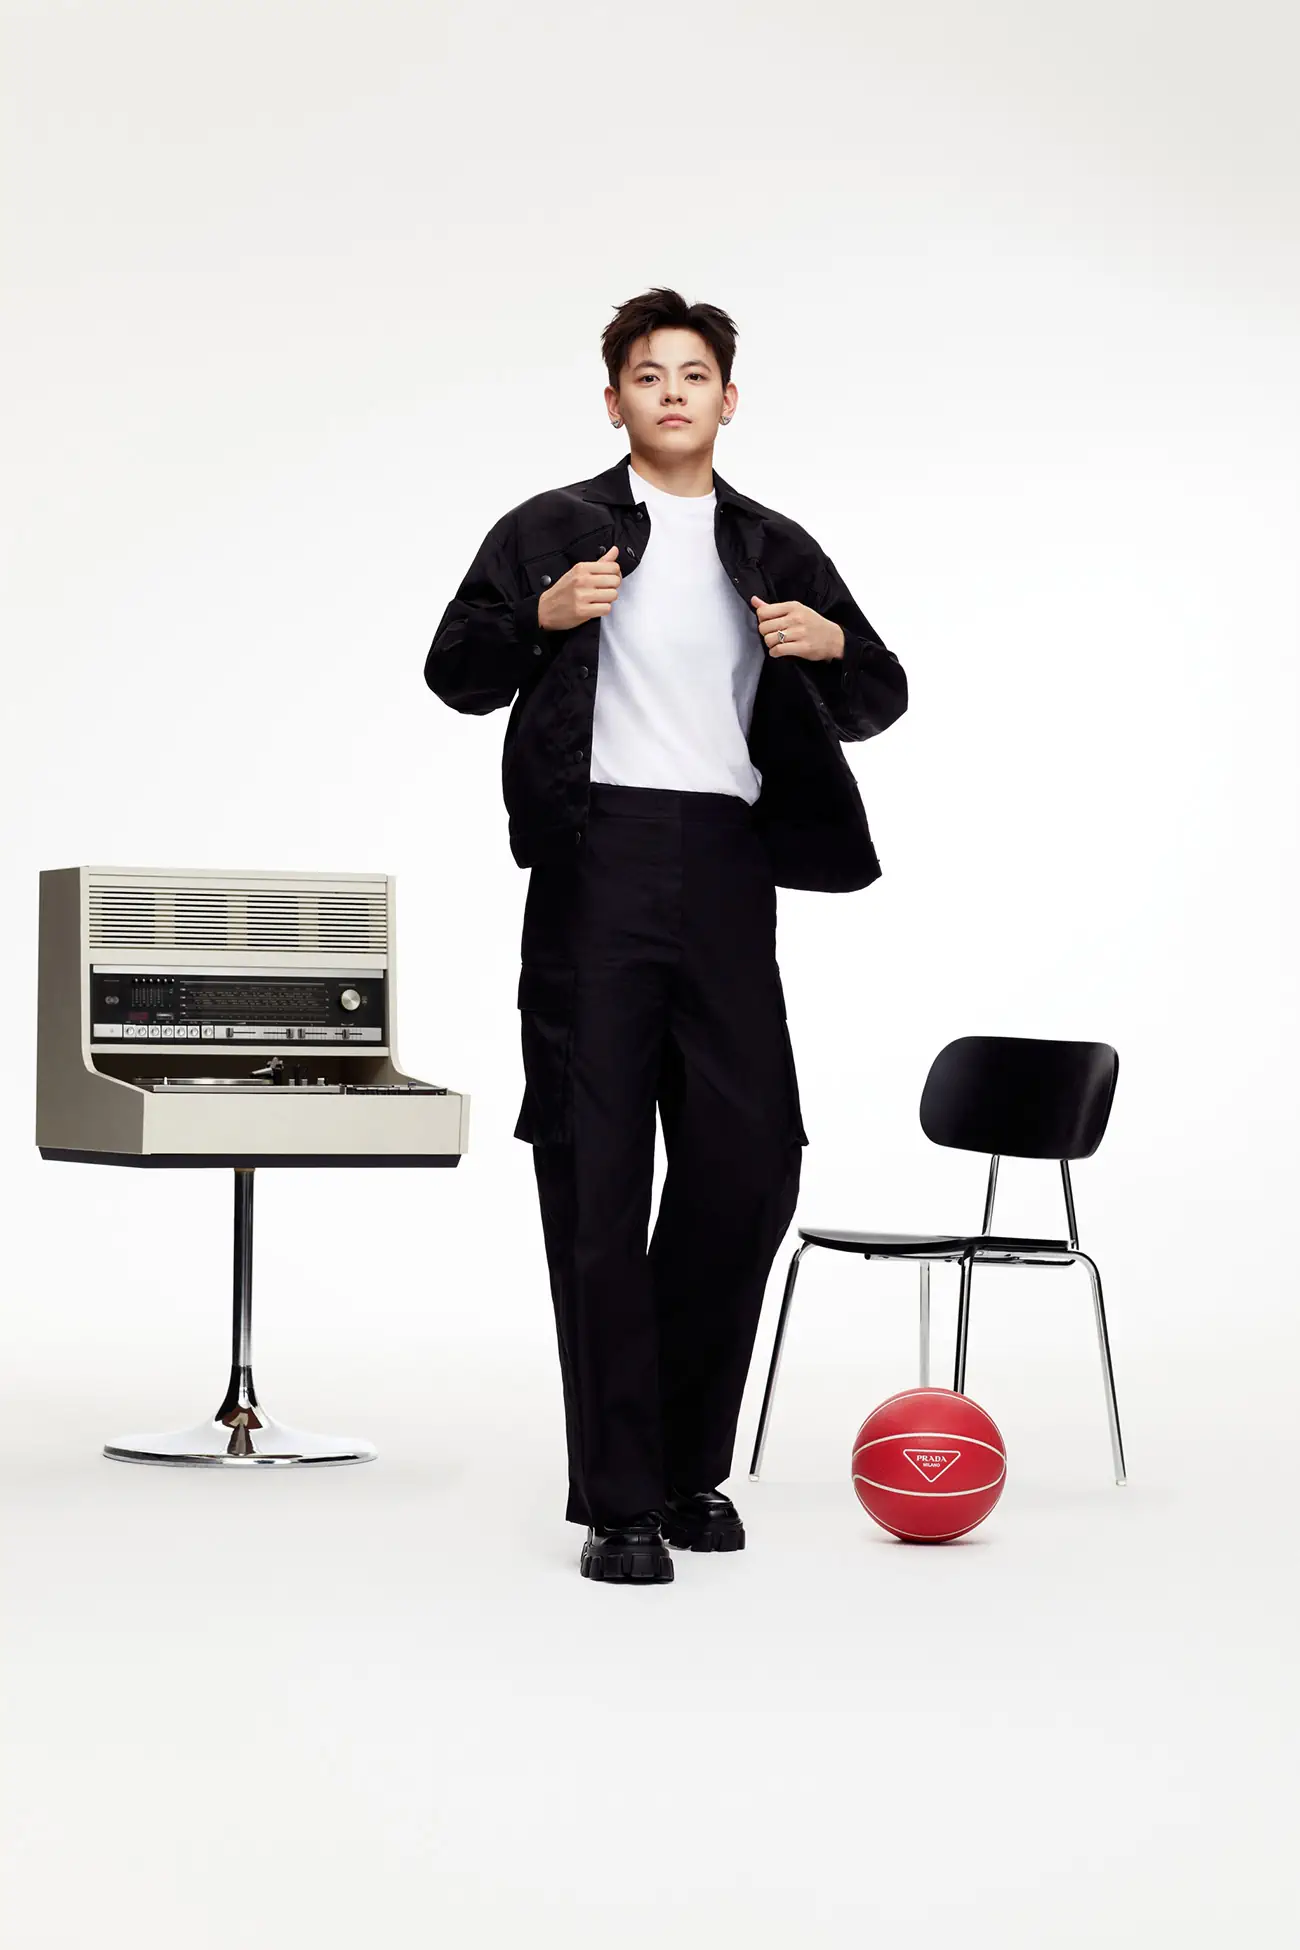 Chinese basketball star Shuyu Yang named as Prada's newest brand ambassador